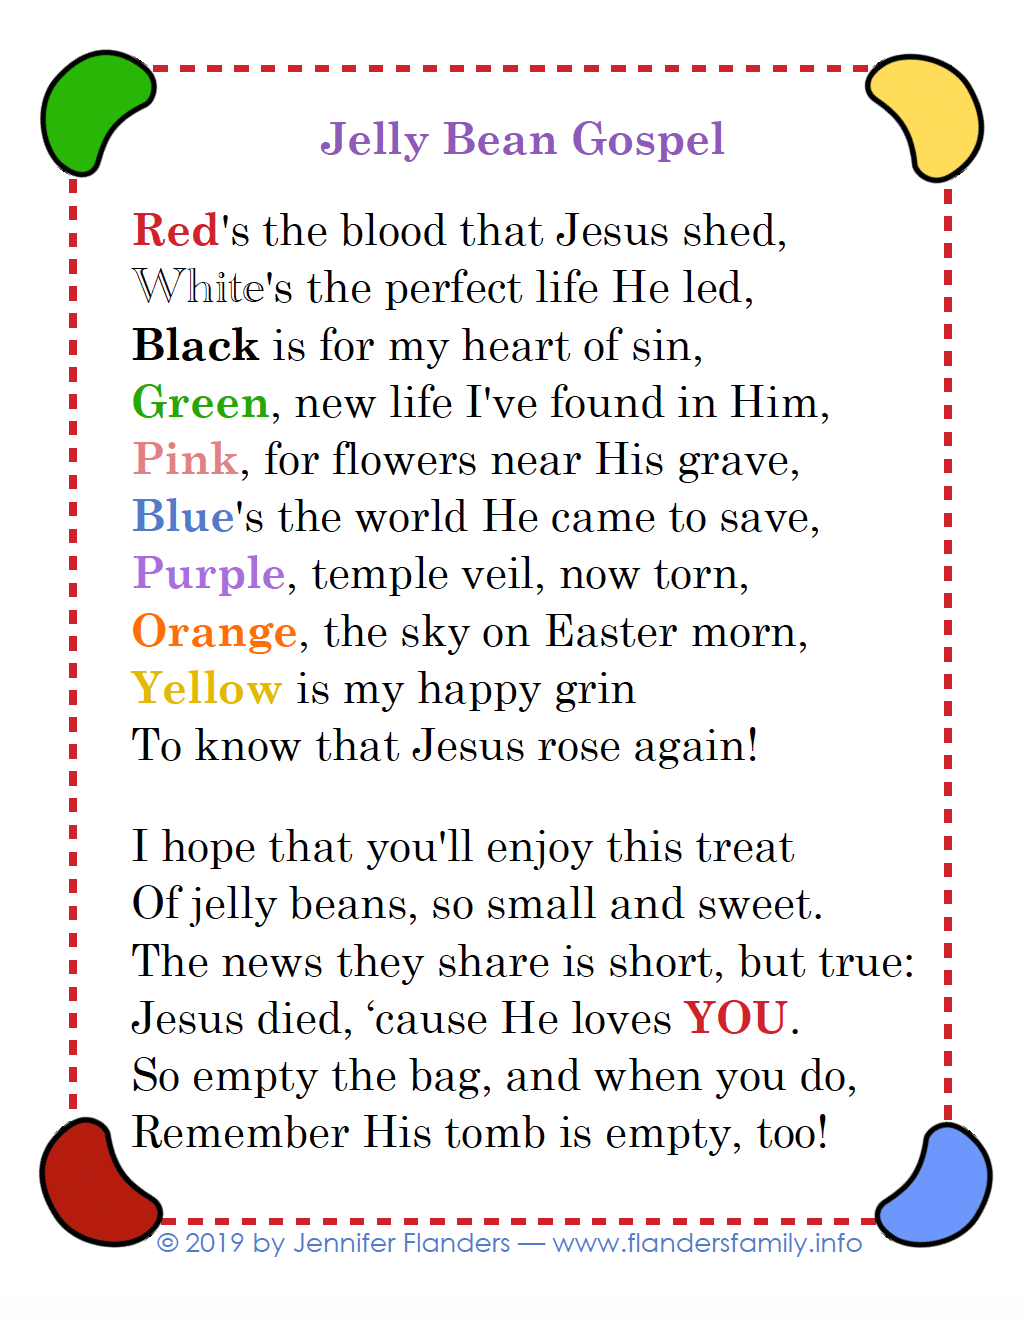  Le Gospel de Jelly Bean (un imprimable gratuit de www.flandersfamily.info)